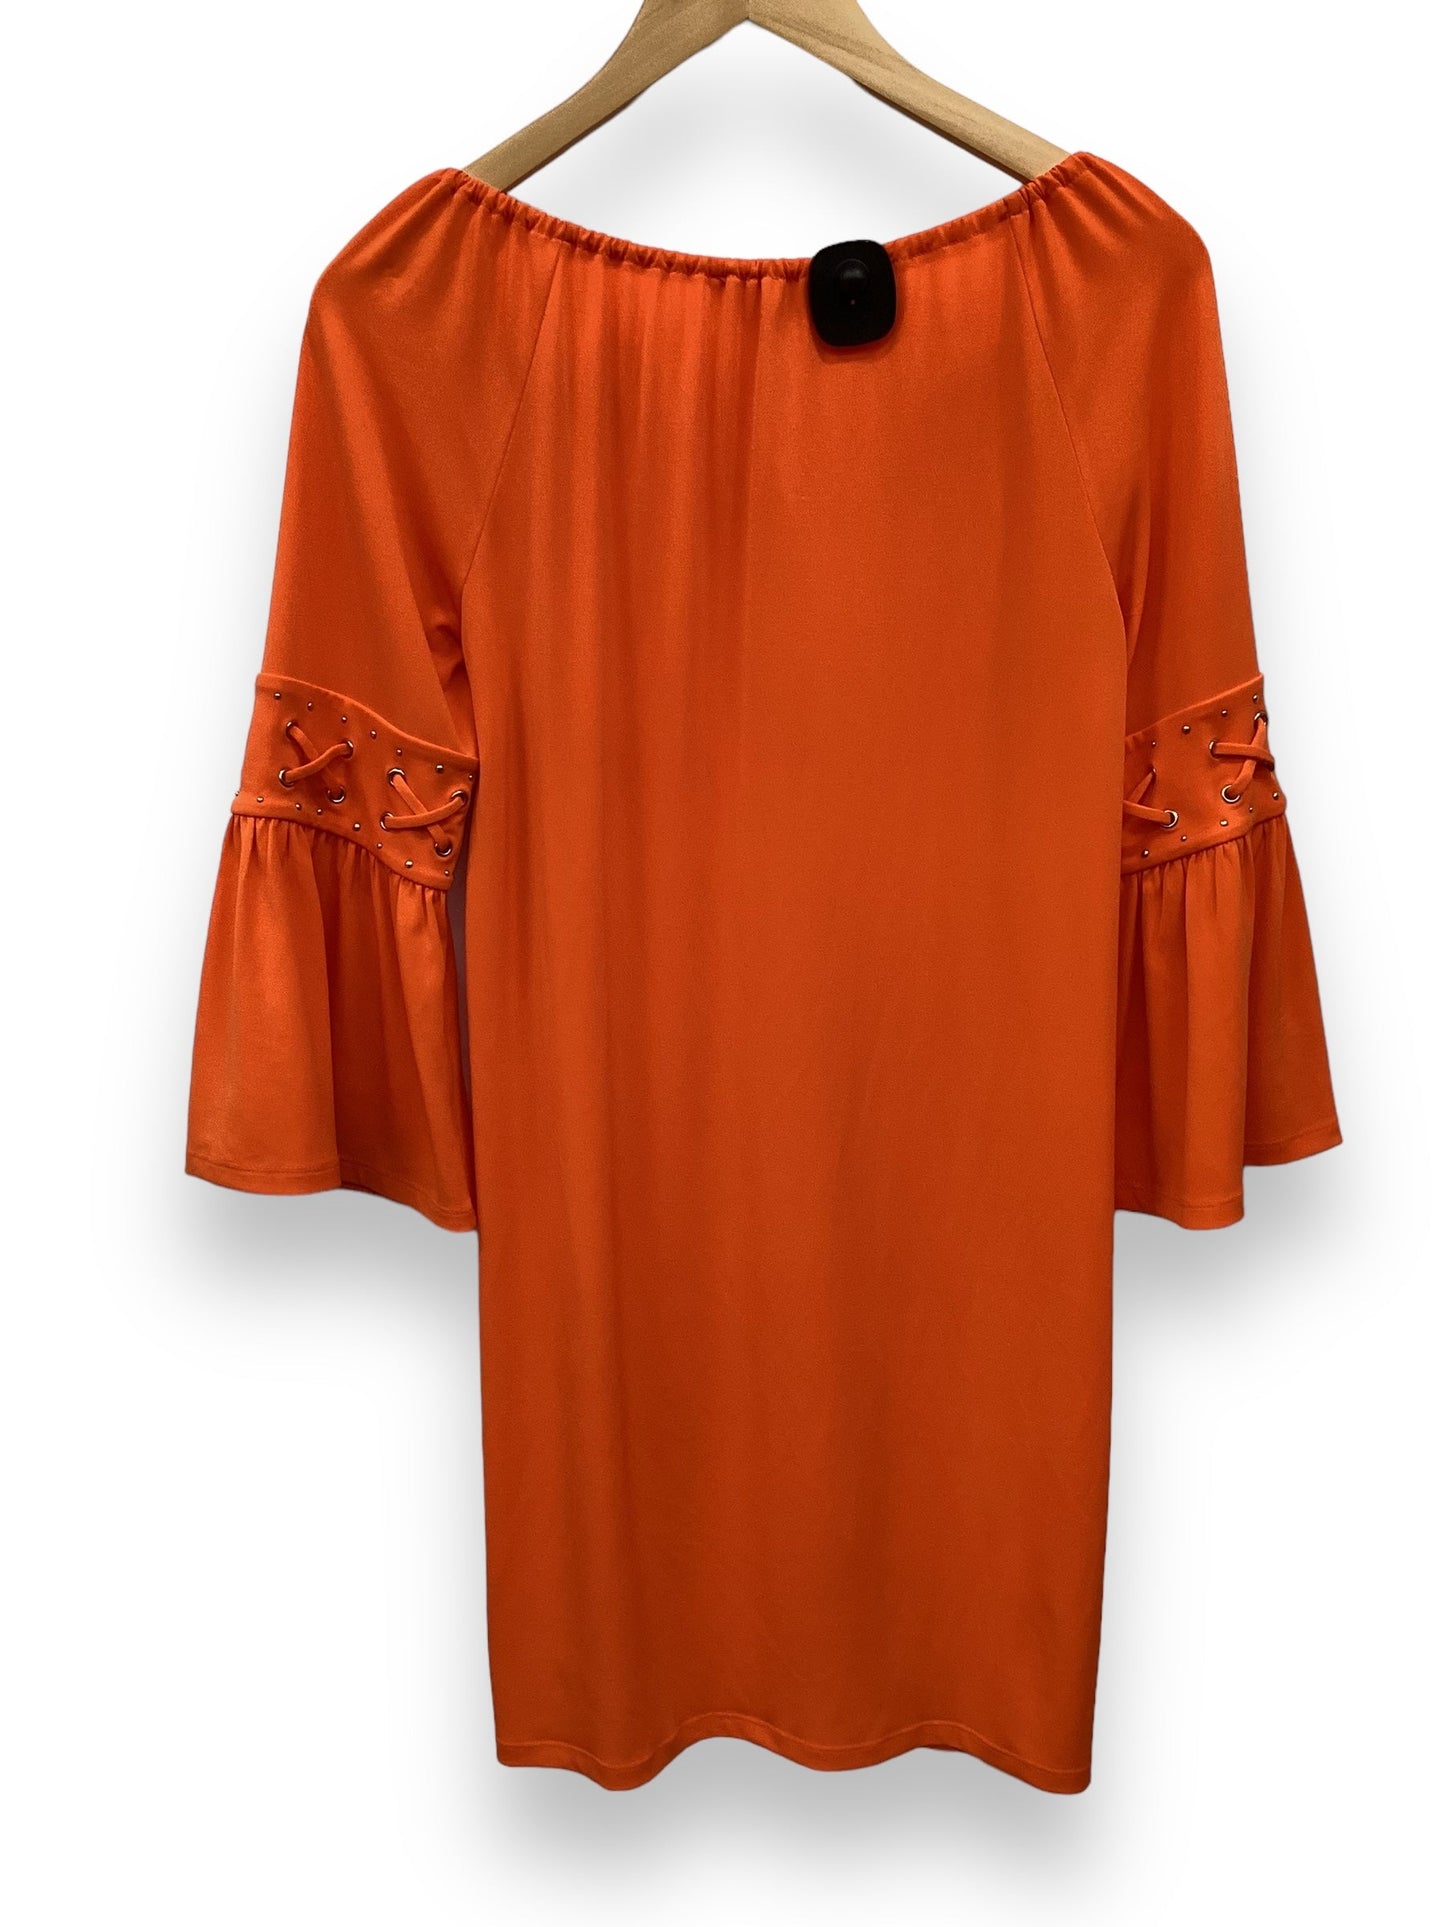 Orange Dress Designer Michael Kors, Size Xs